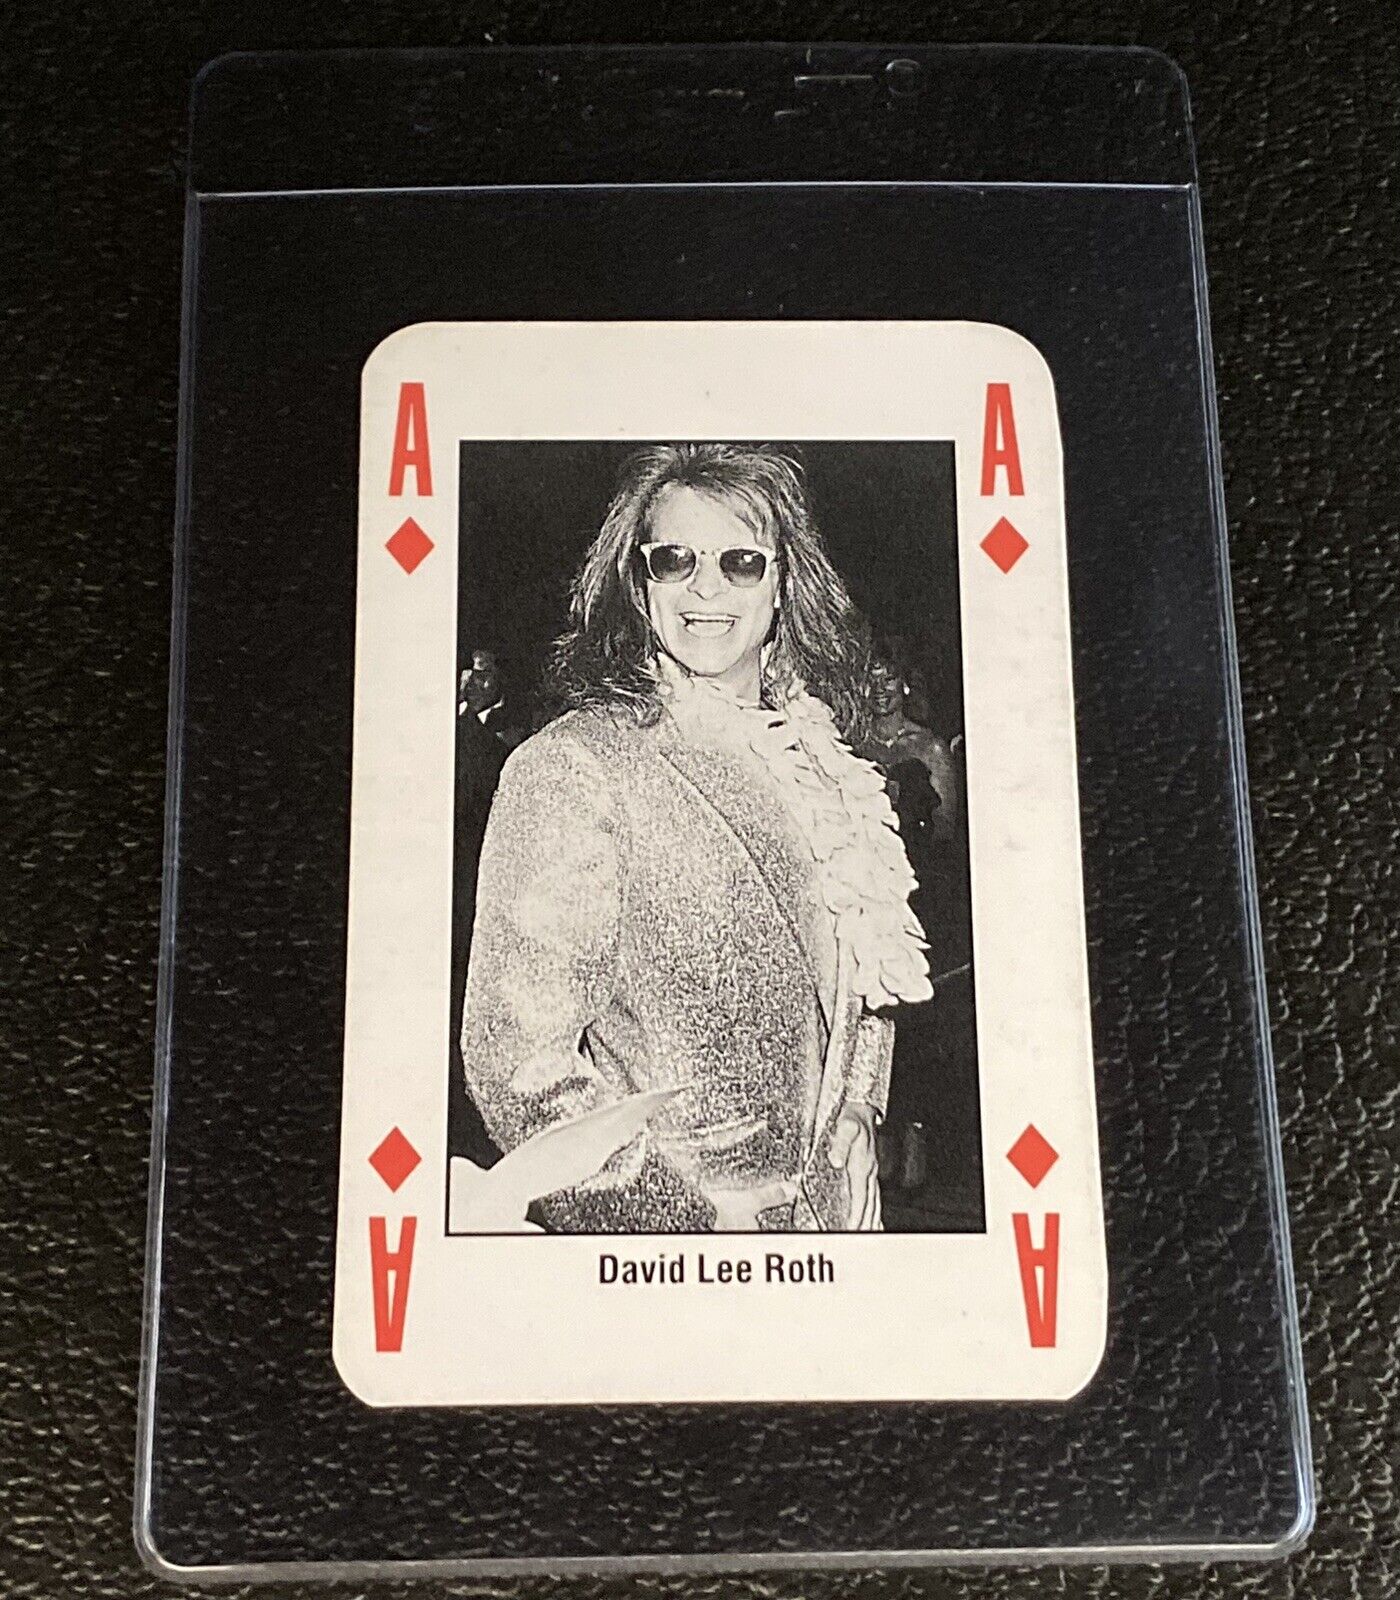 1993 Kerrang Card David Lee Roth Van Halen The King Of Metal Playing Card Rock